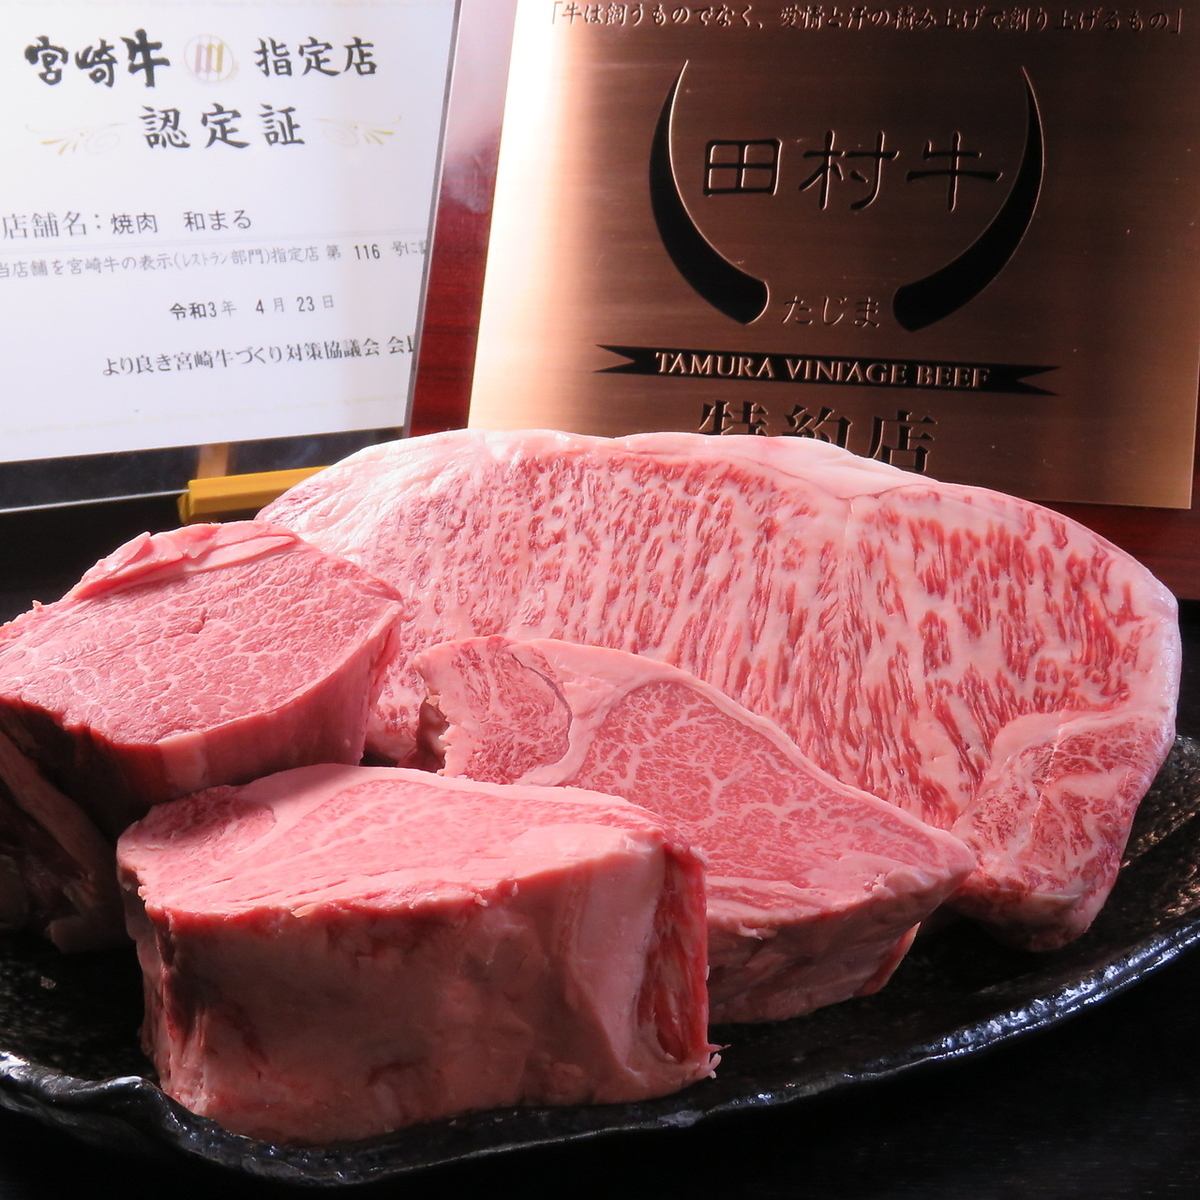 [Kuyasu] Purchased at the Shibaura wholesale market/A restaurant where you can enjoy A5 Kuroge Wagyu beef at reasonable prices